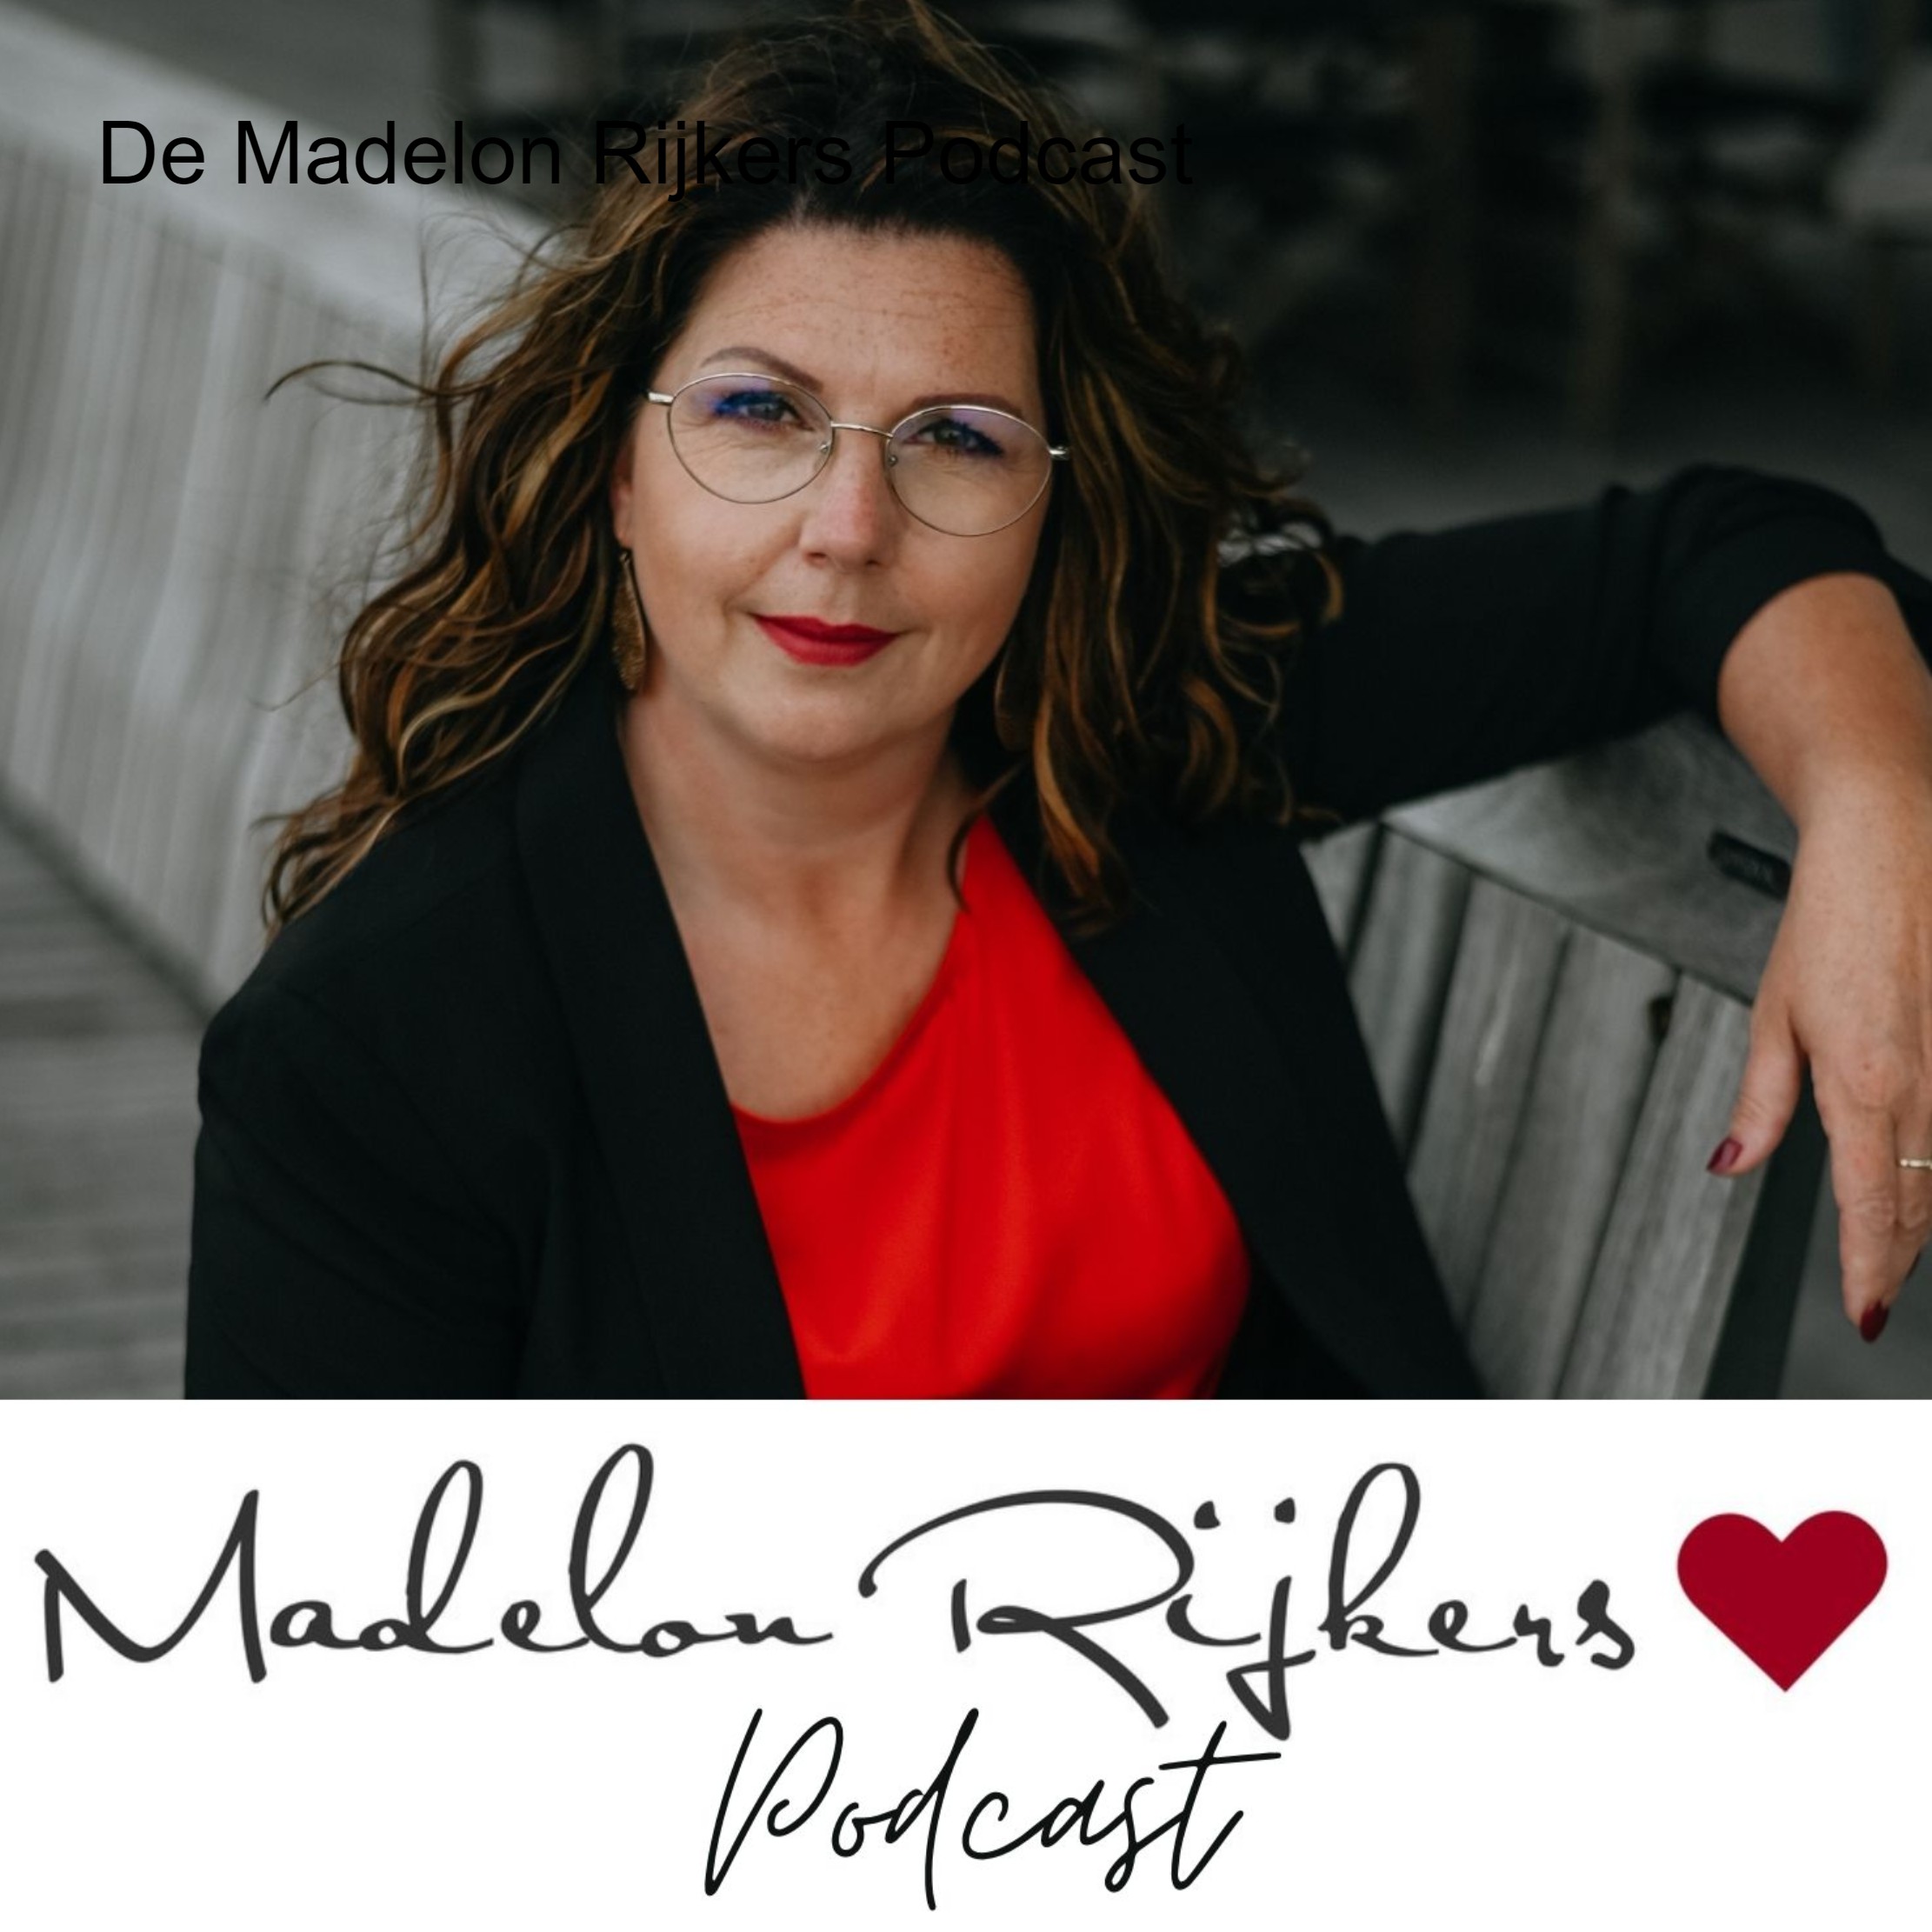 De Madelon Rijkers Podcast